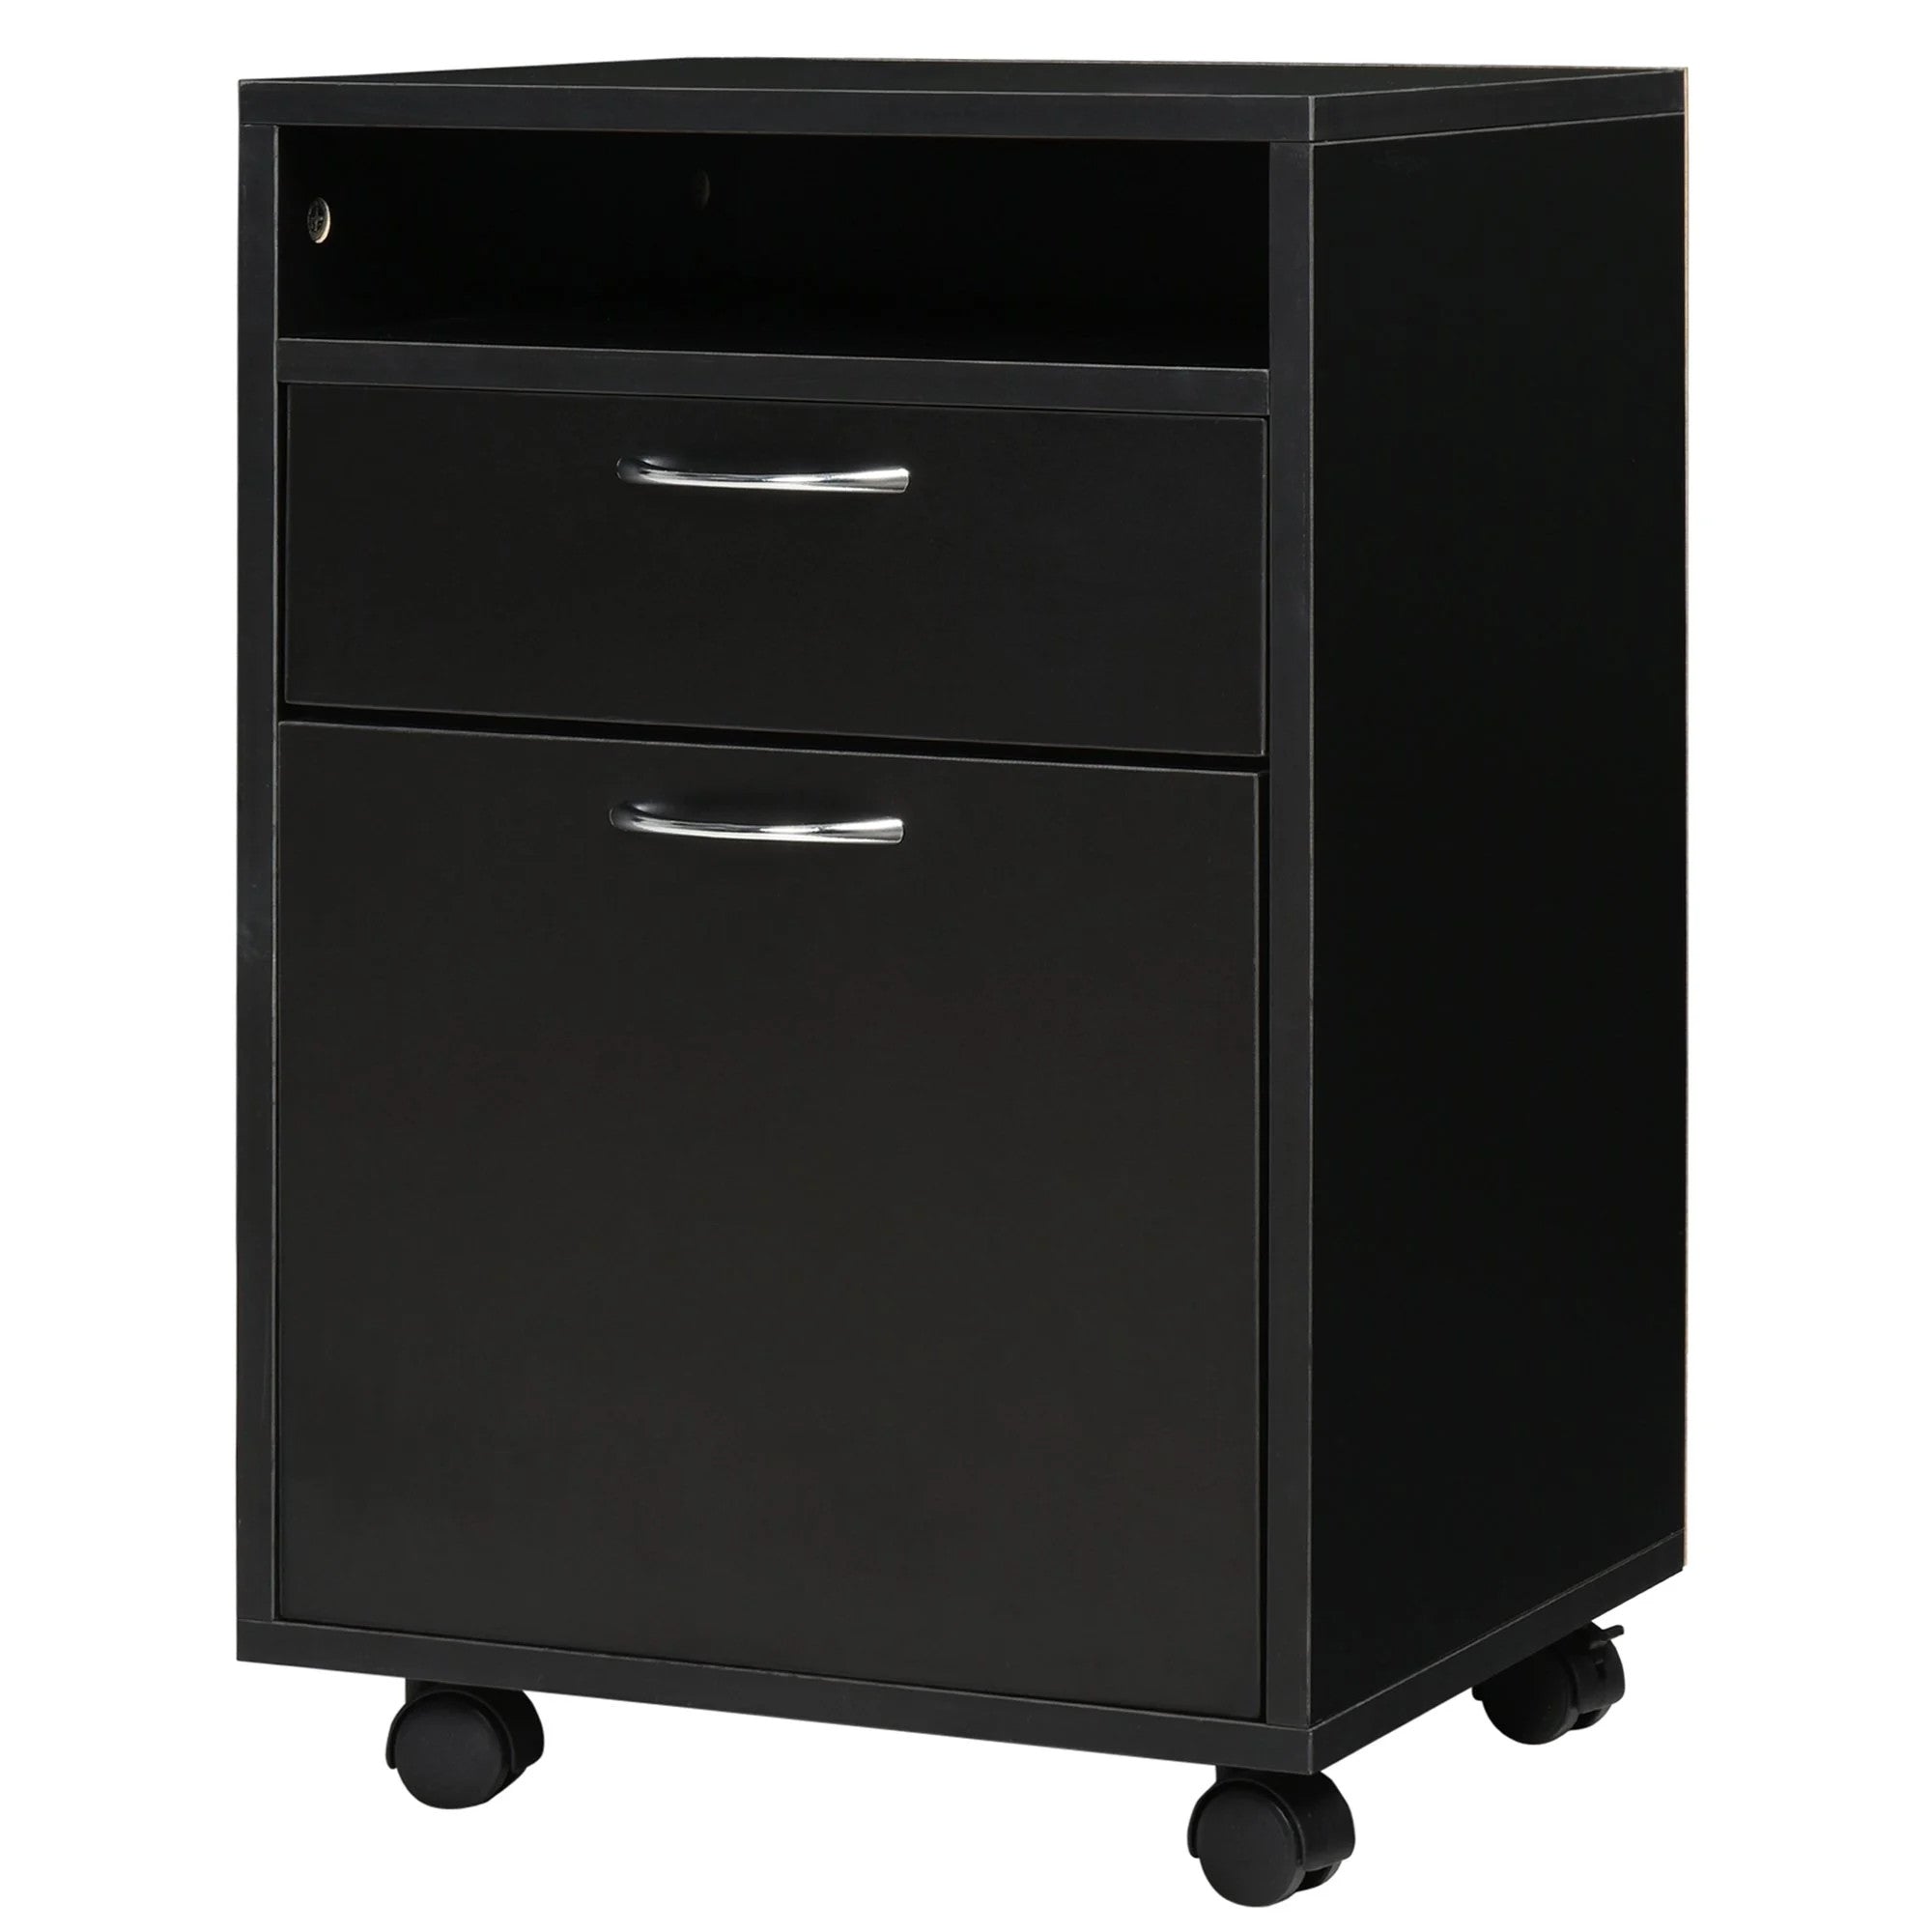 ProperAV 60cm 2-Drawer Office Home Storage Cabinet (Black)